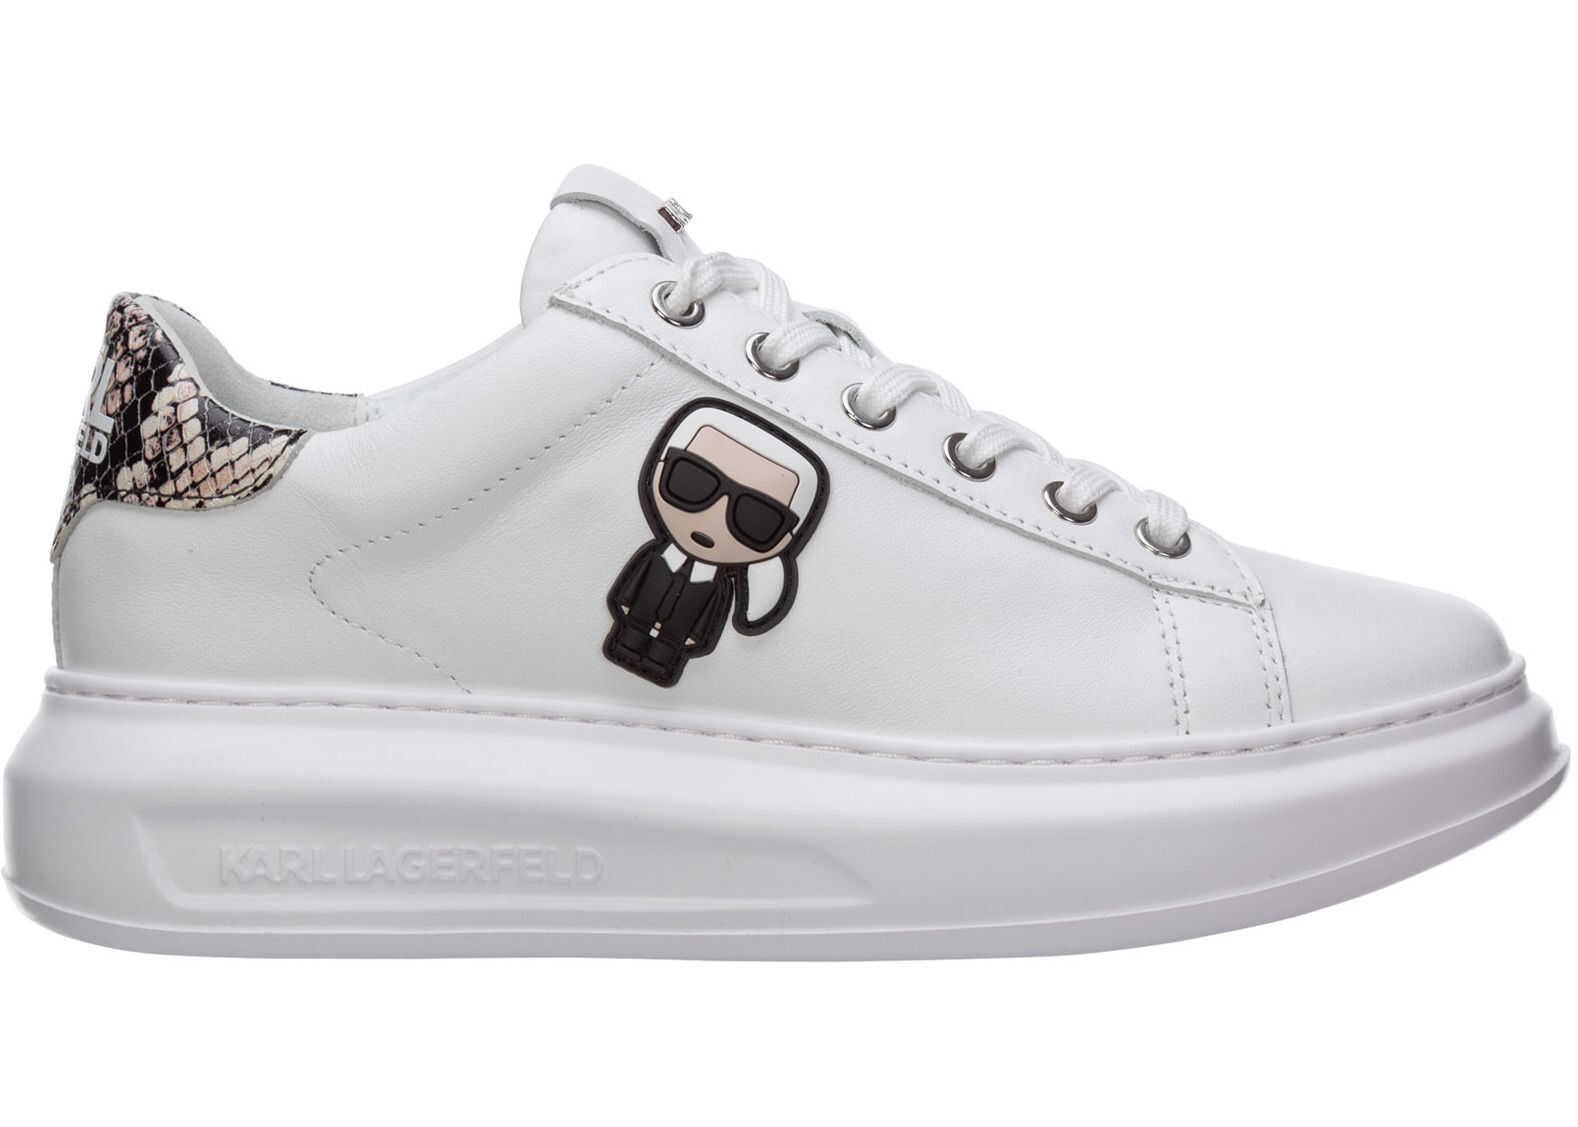 Karl Lagerfeld Shoes Leather Trainers Sneakers K/Ikonik Kapri KL62530 White image0